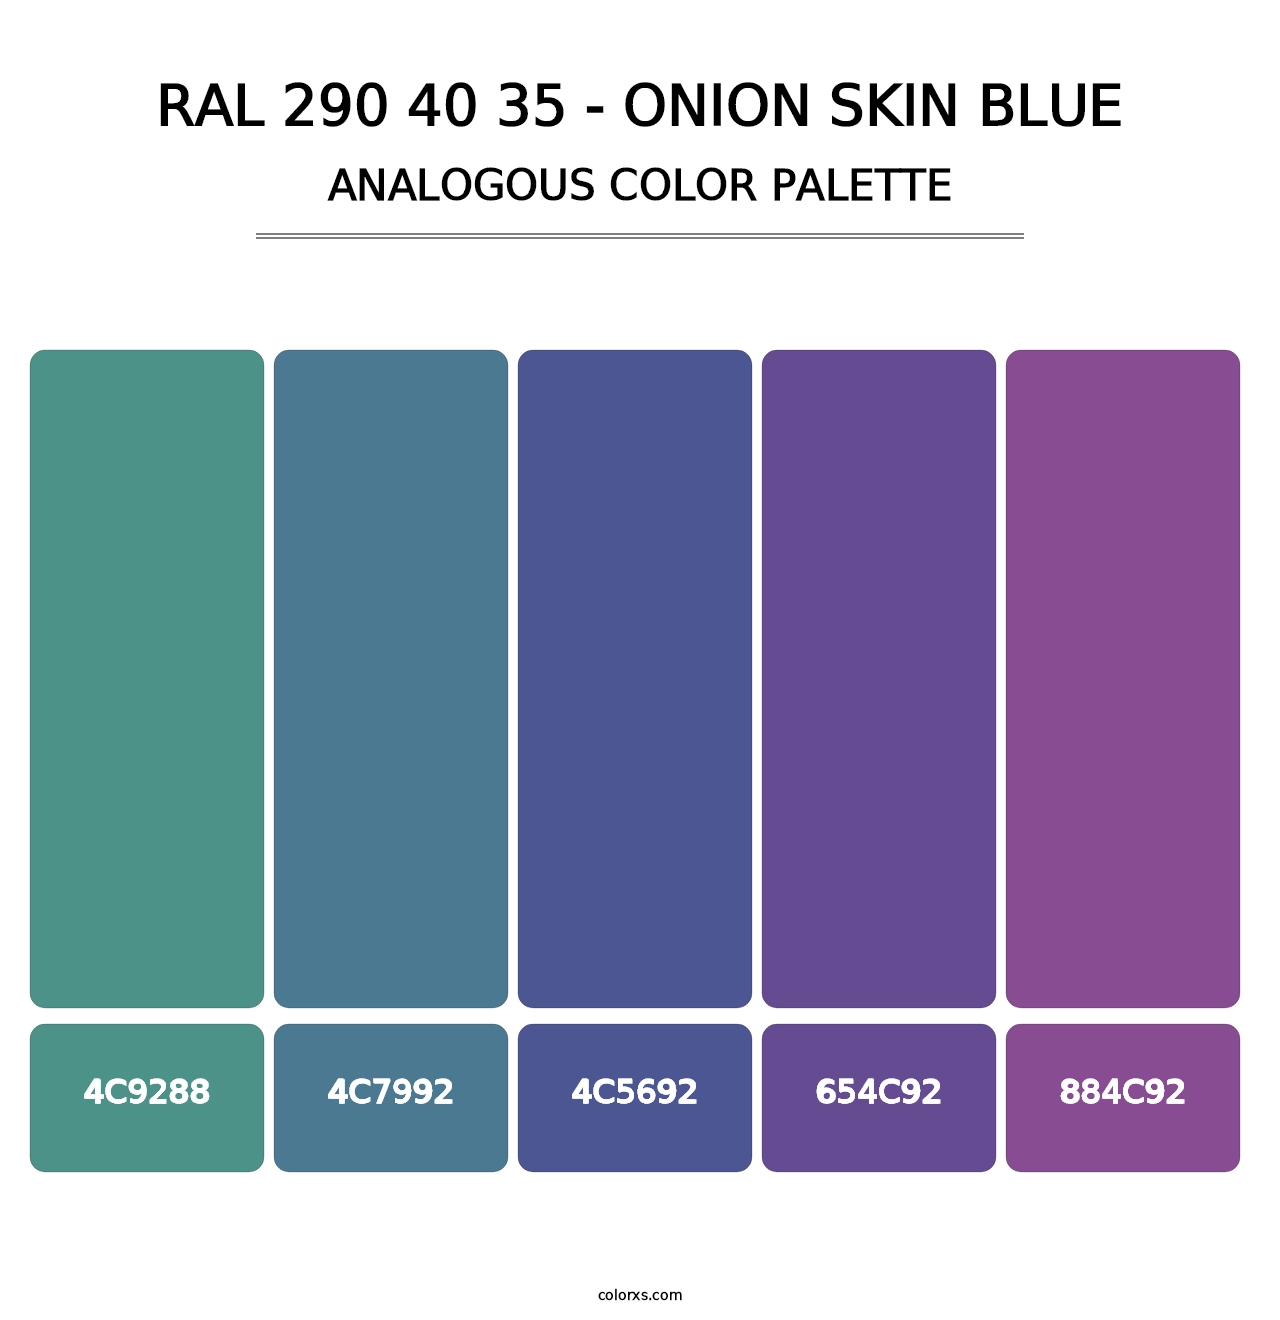 RAL 290 40 35 - Onion Skin Blue - Analogous Color Palette